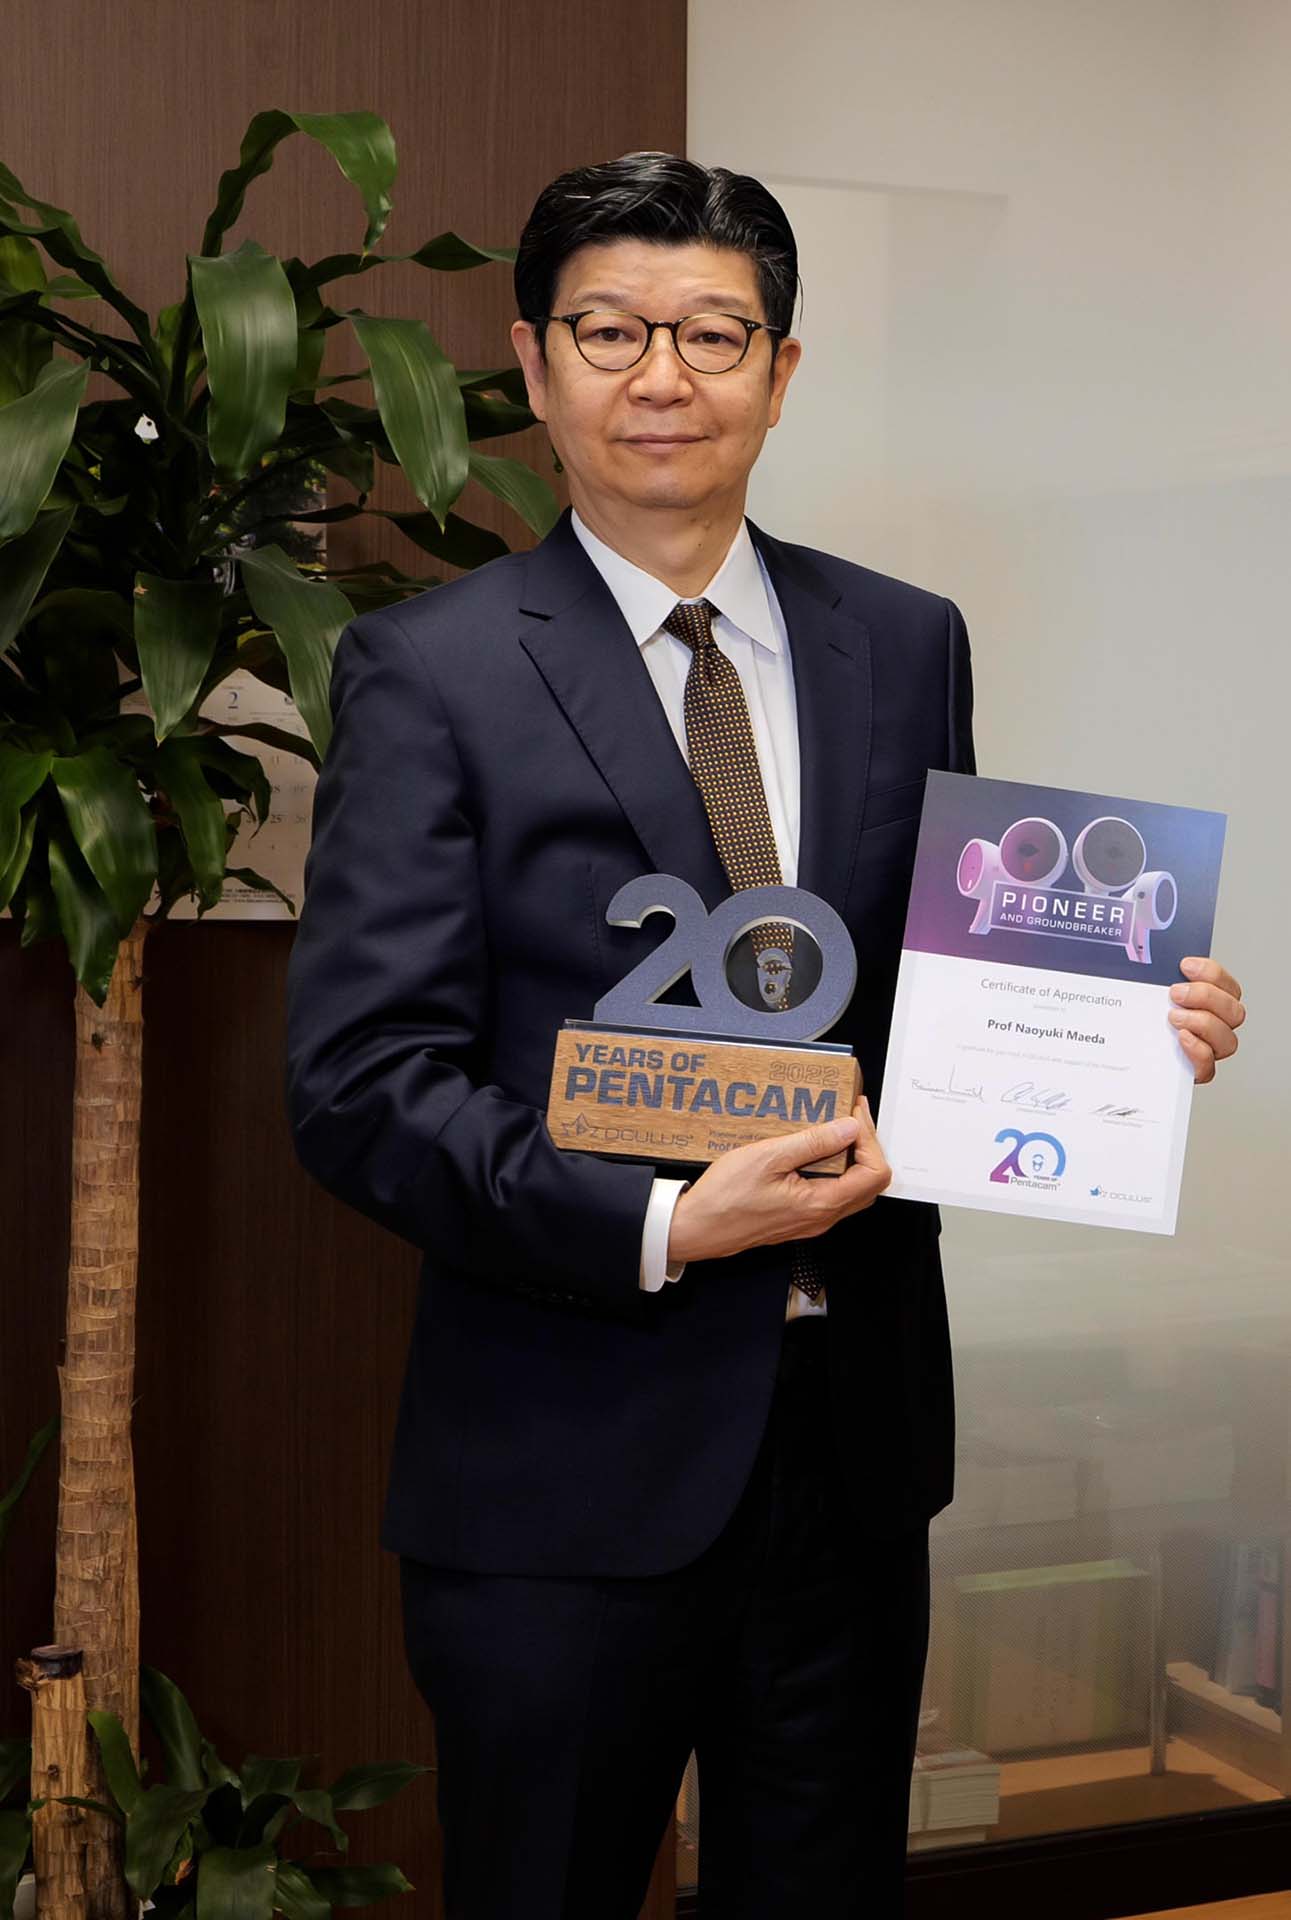 Prof Maeda Naoyuki holding the 20th Anniversary Pentacam® Trophy and the Certificate of Appreciation